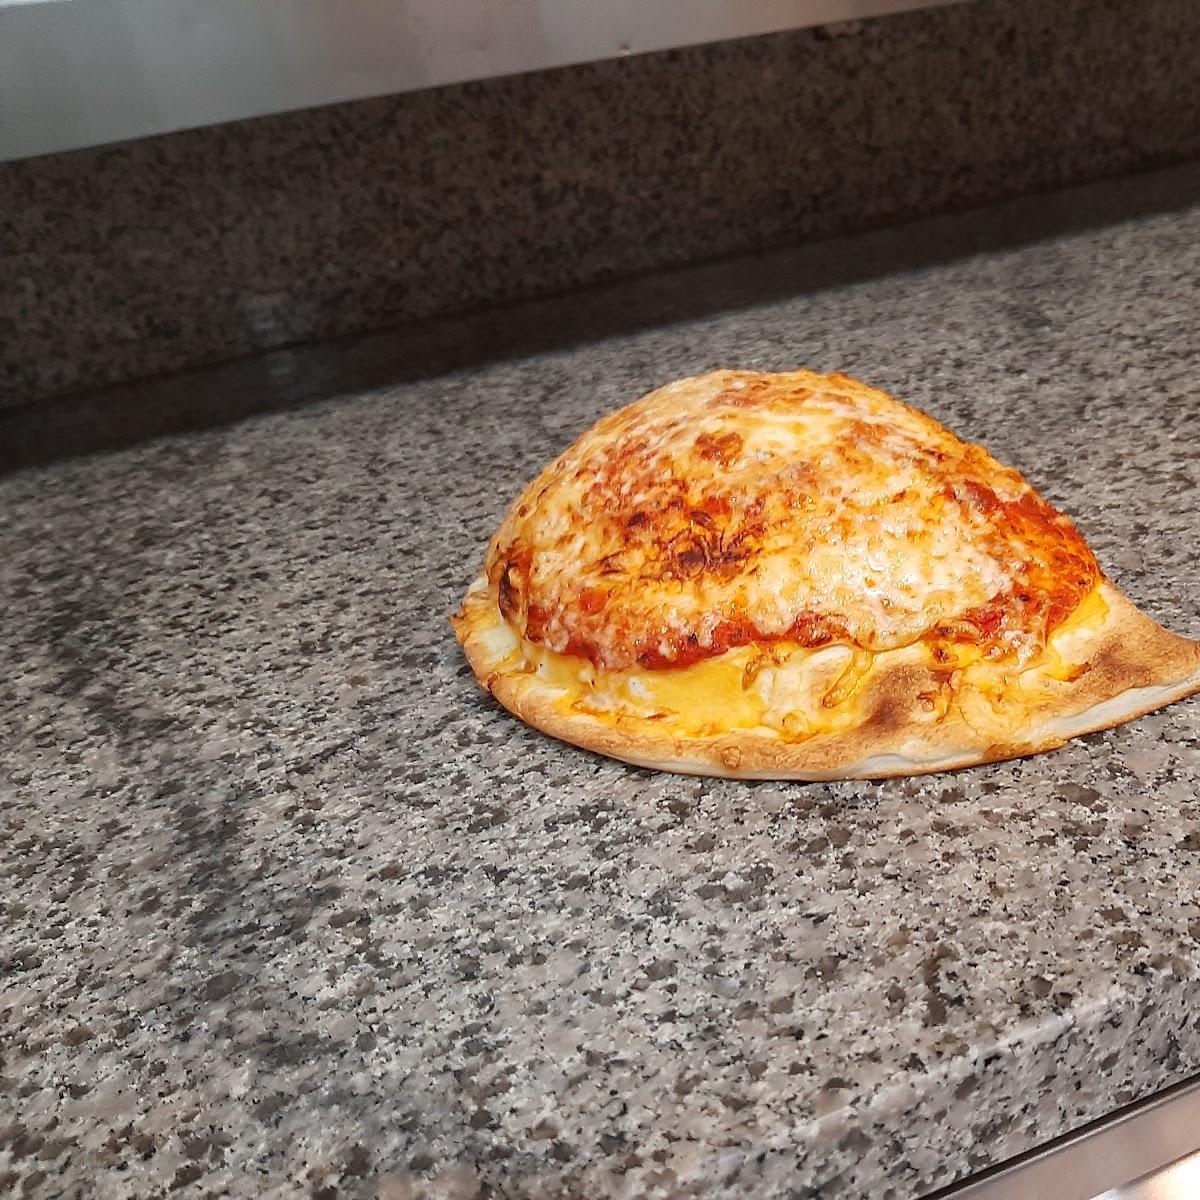 Restaurant "Pizza Blitz" in Östringen